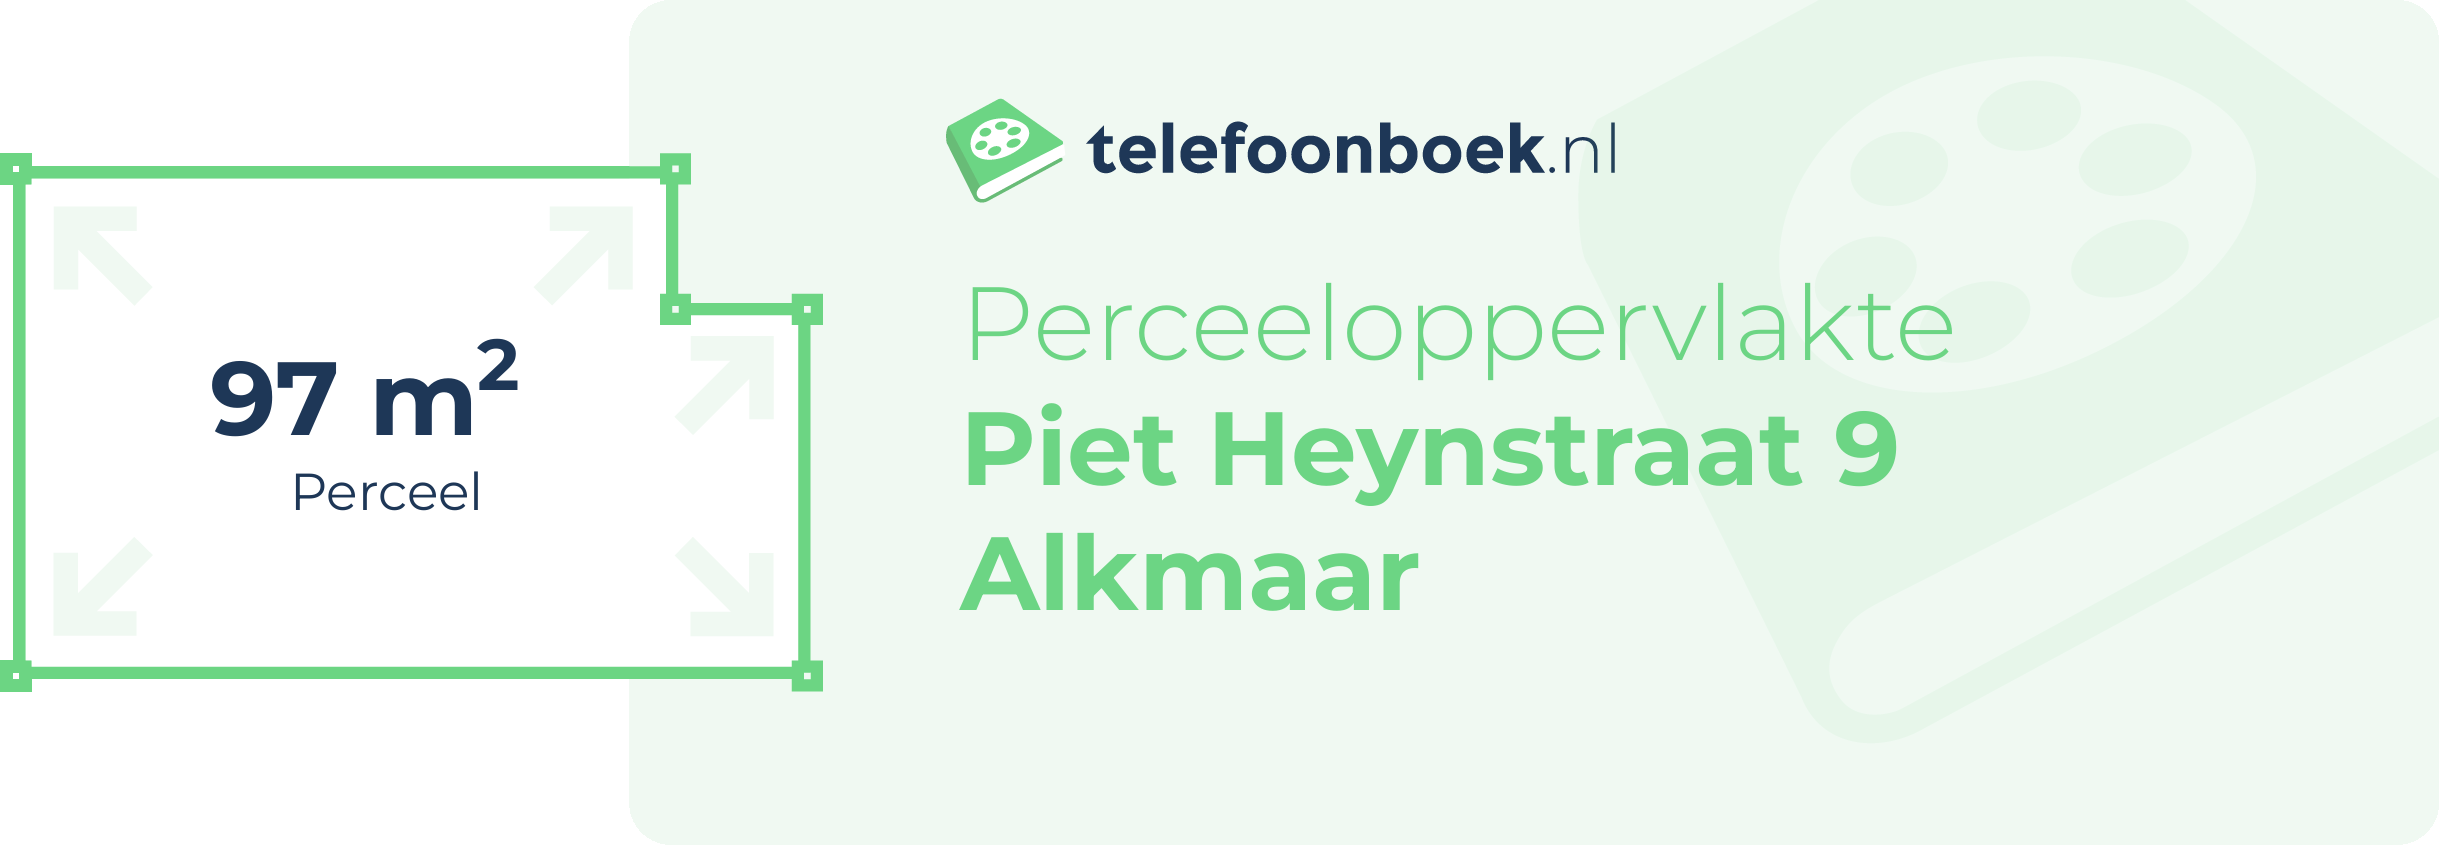 Perceeloppervlakte Piet Heynstraat 9 Alkmaar